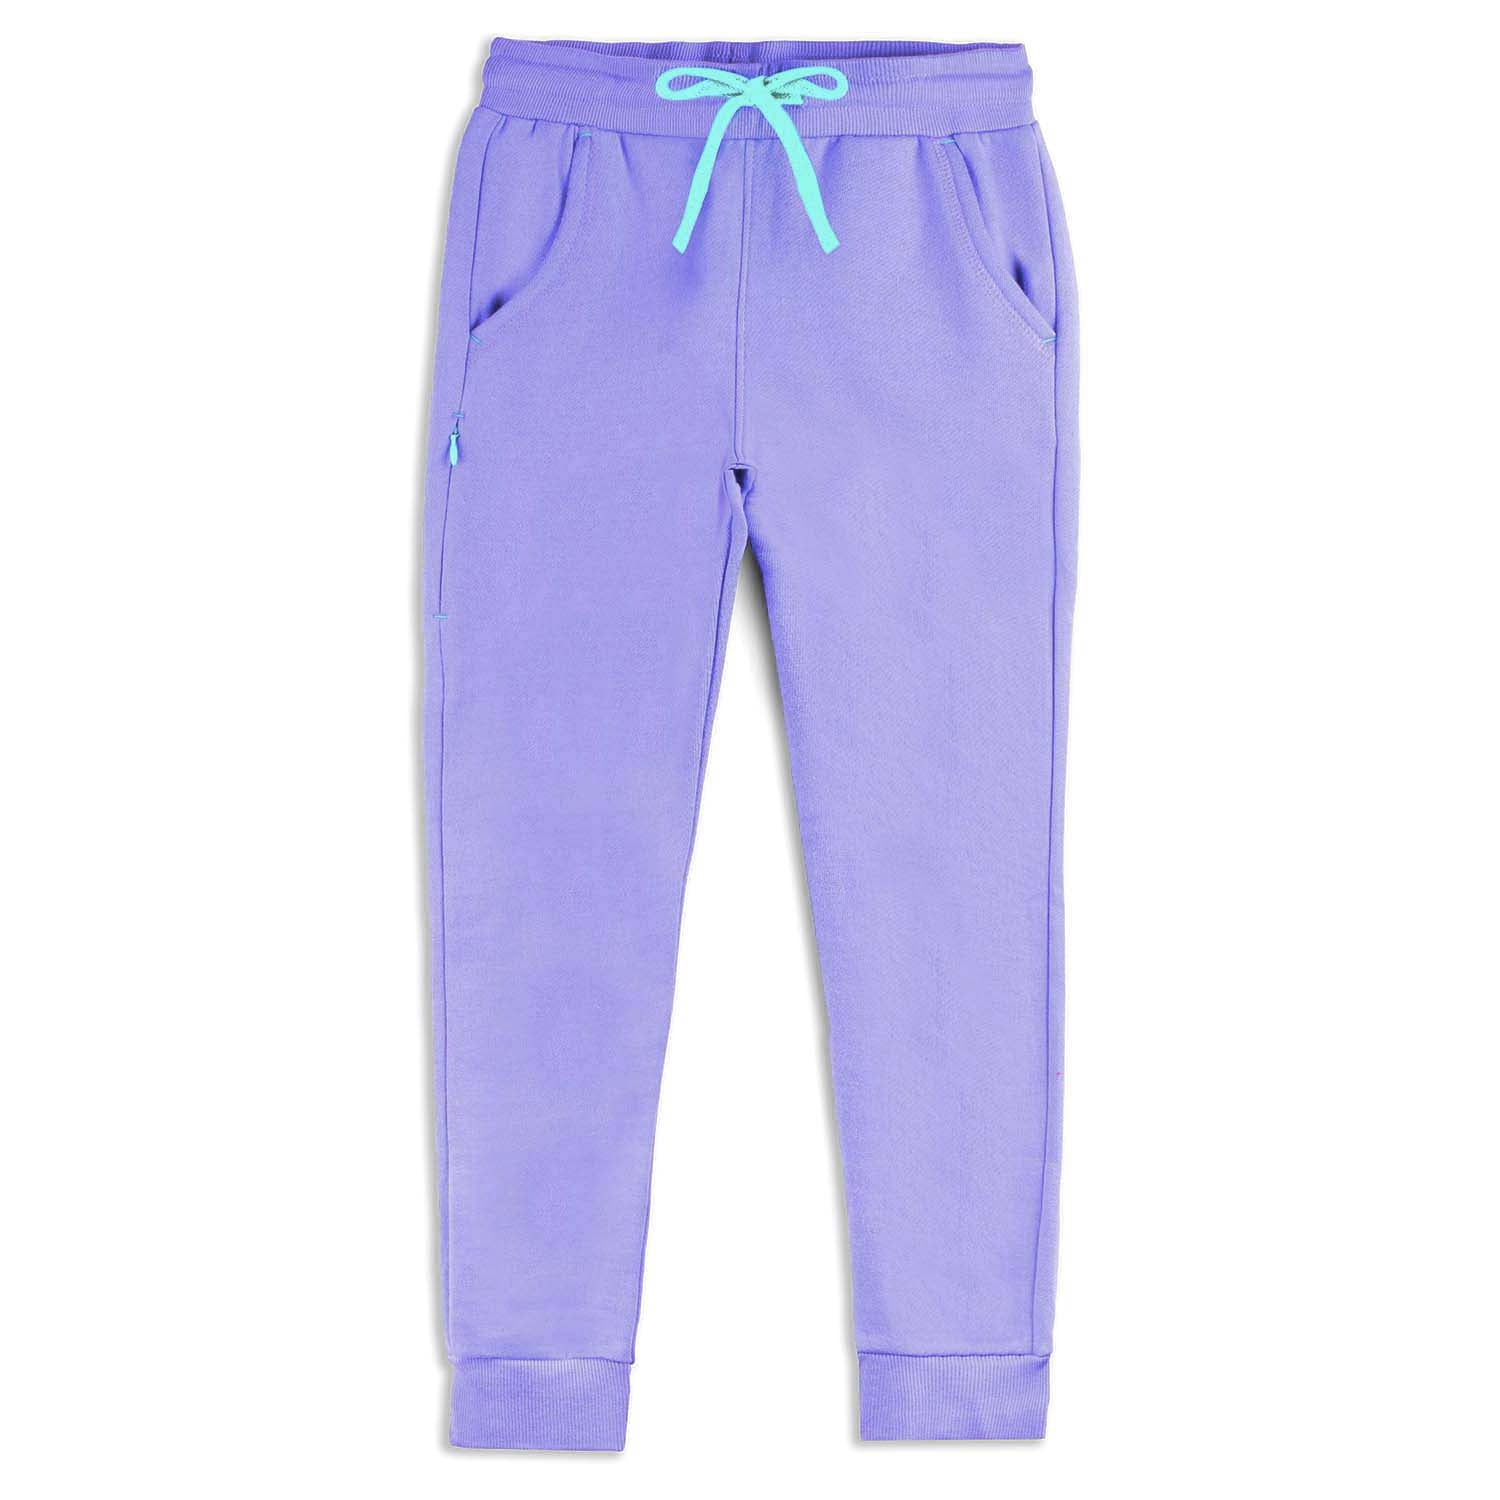 Childrens Place Sweatpants Girls 16 XXL Gray Rainbow Striped